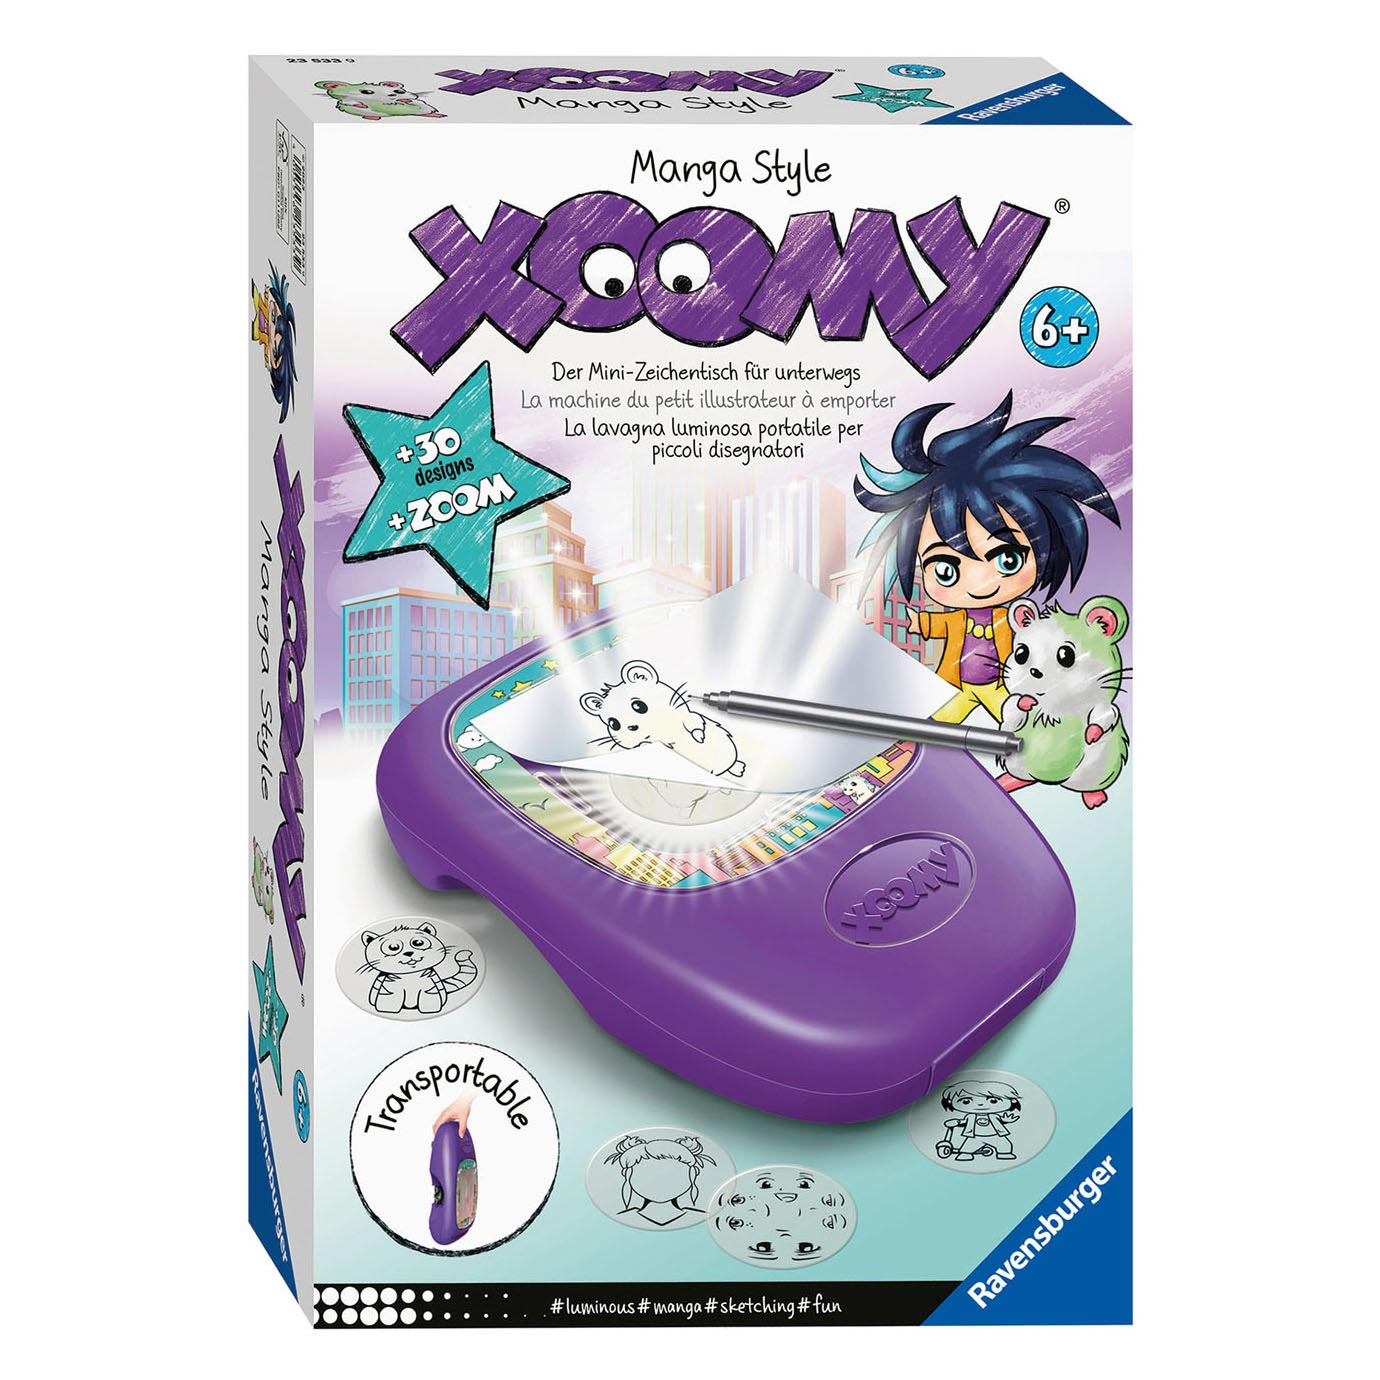 Xoomy maxi 7+ tekenprojector